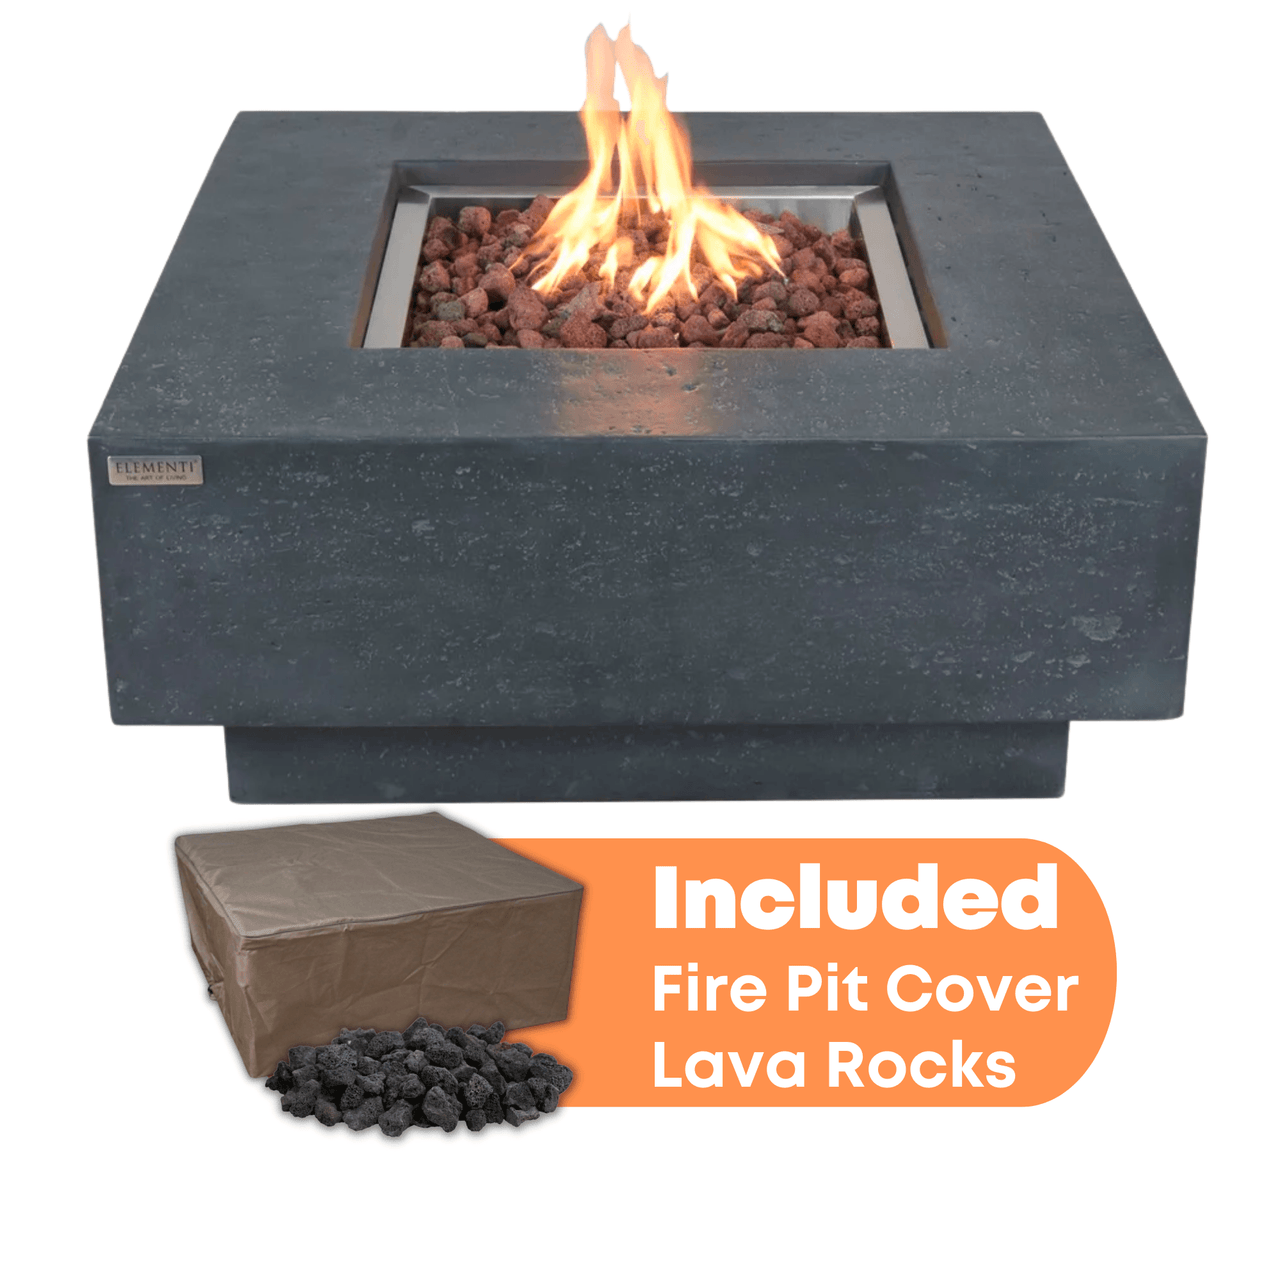 Elementi - Manhattan Square Concrete Fire Pit Table OFG103 - Fire Pit Stock